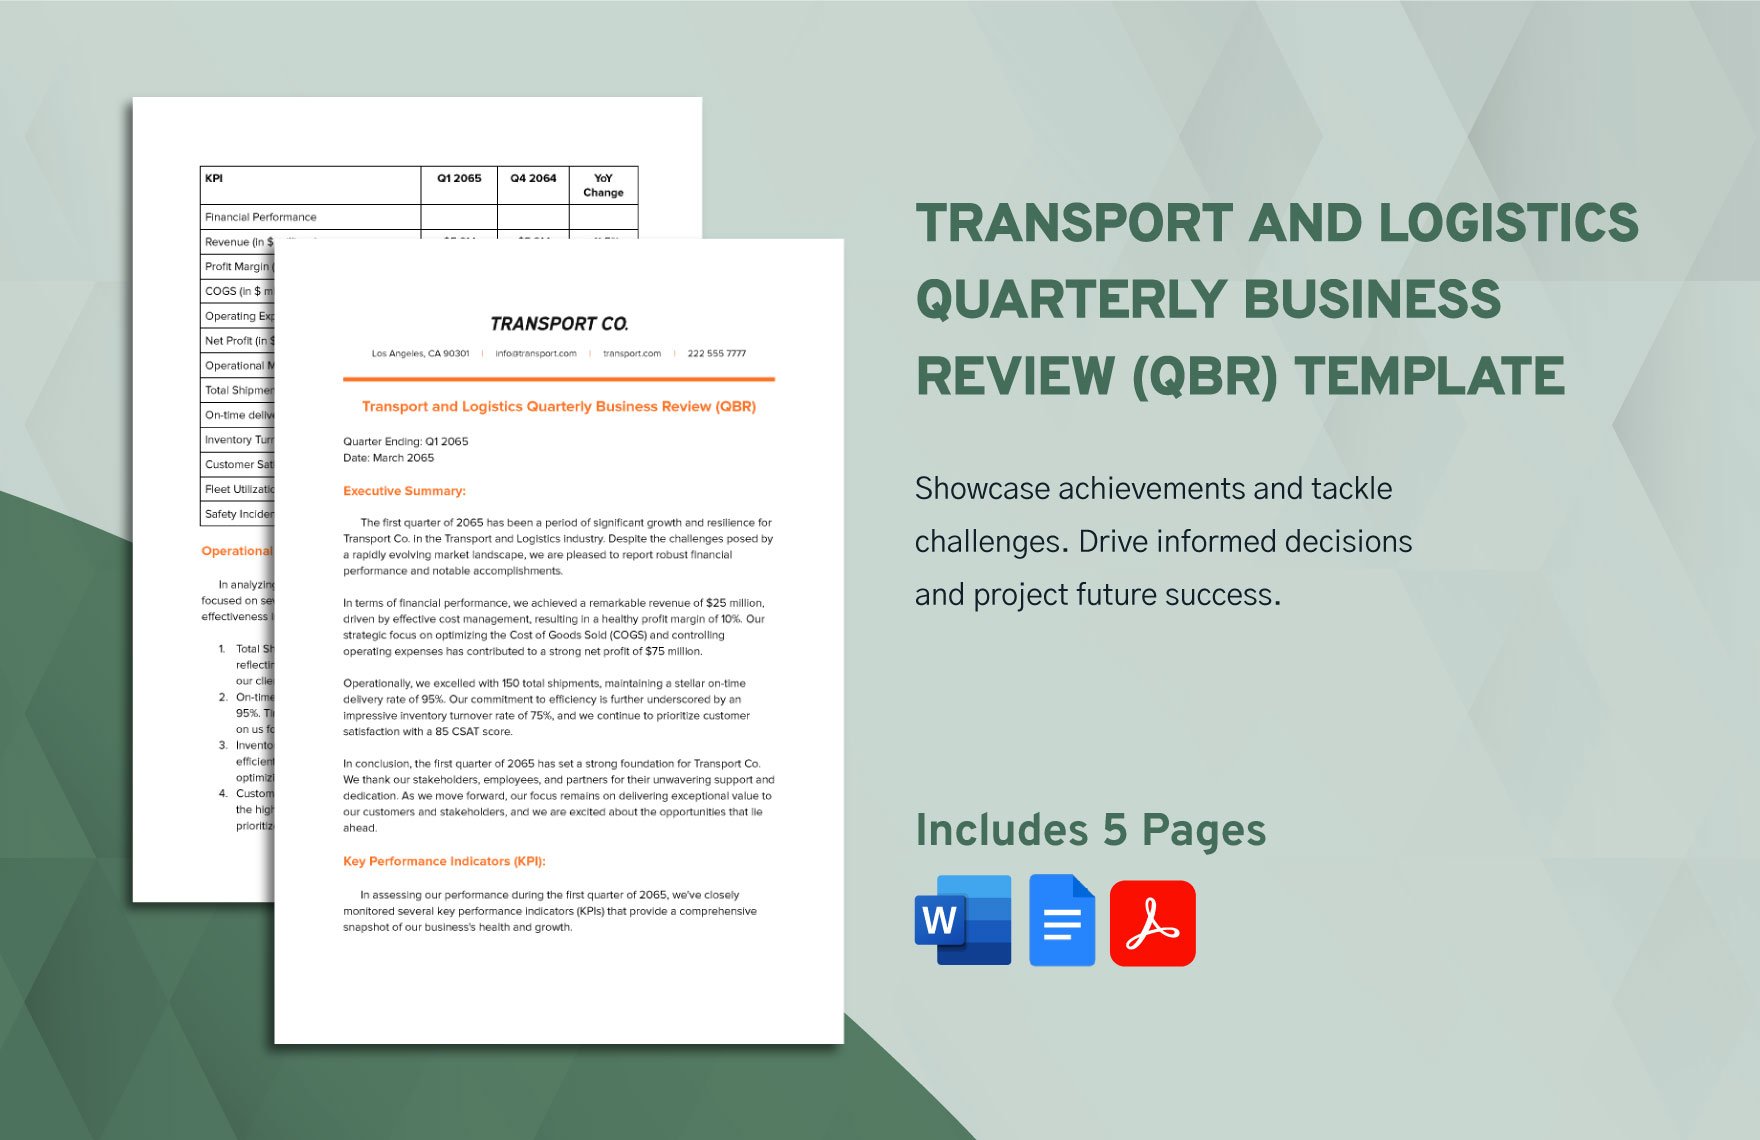 Transport and Logistics Quarterly Business Review (QBR) Template